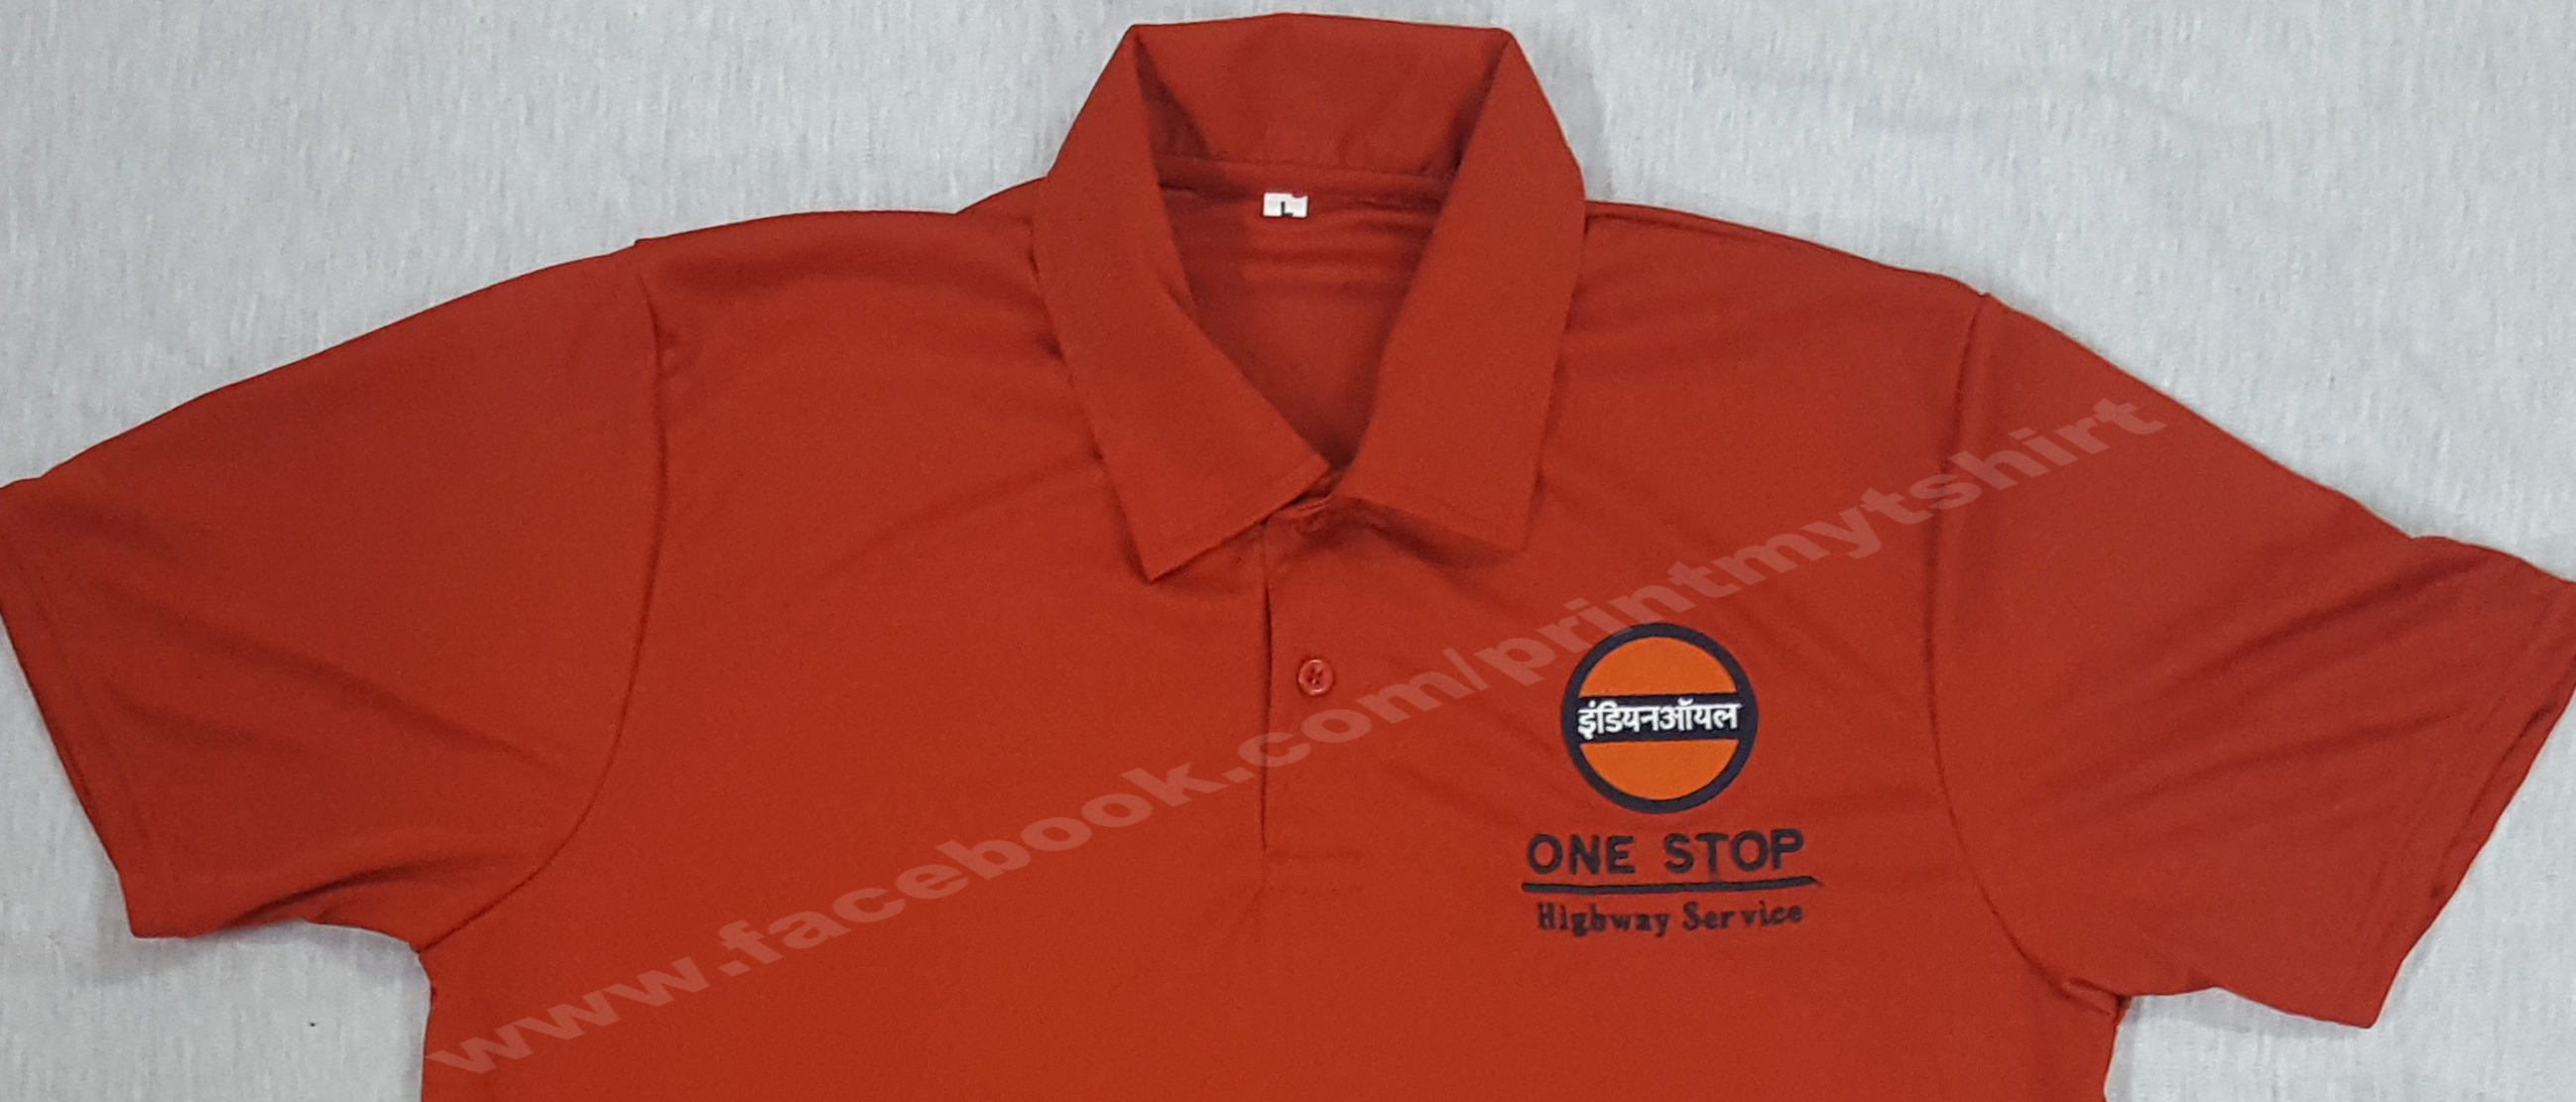 Factory uniform t-shirt manufcaturer, Sk-tshirts